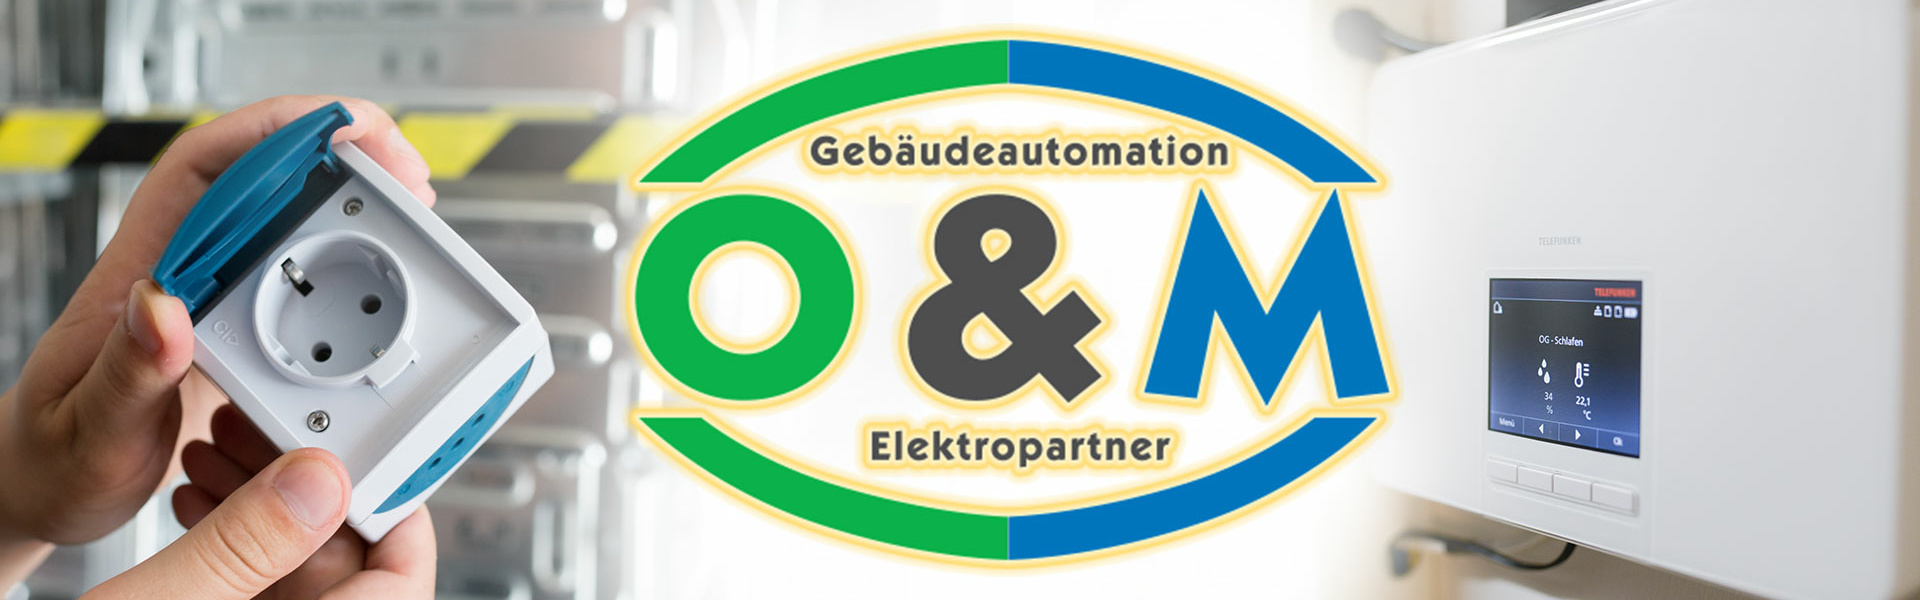 O&M Elektropartner GbR in Waltershausen